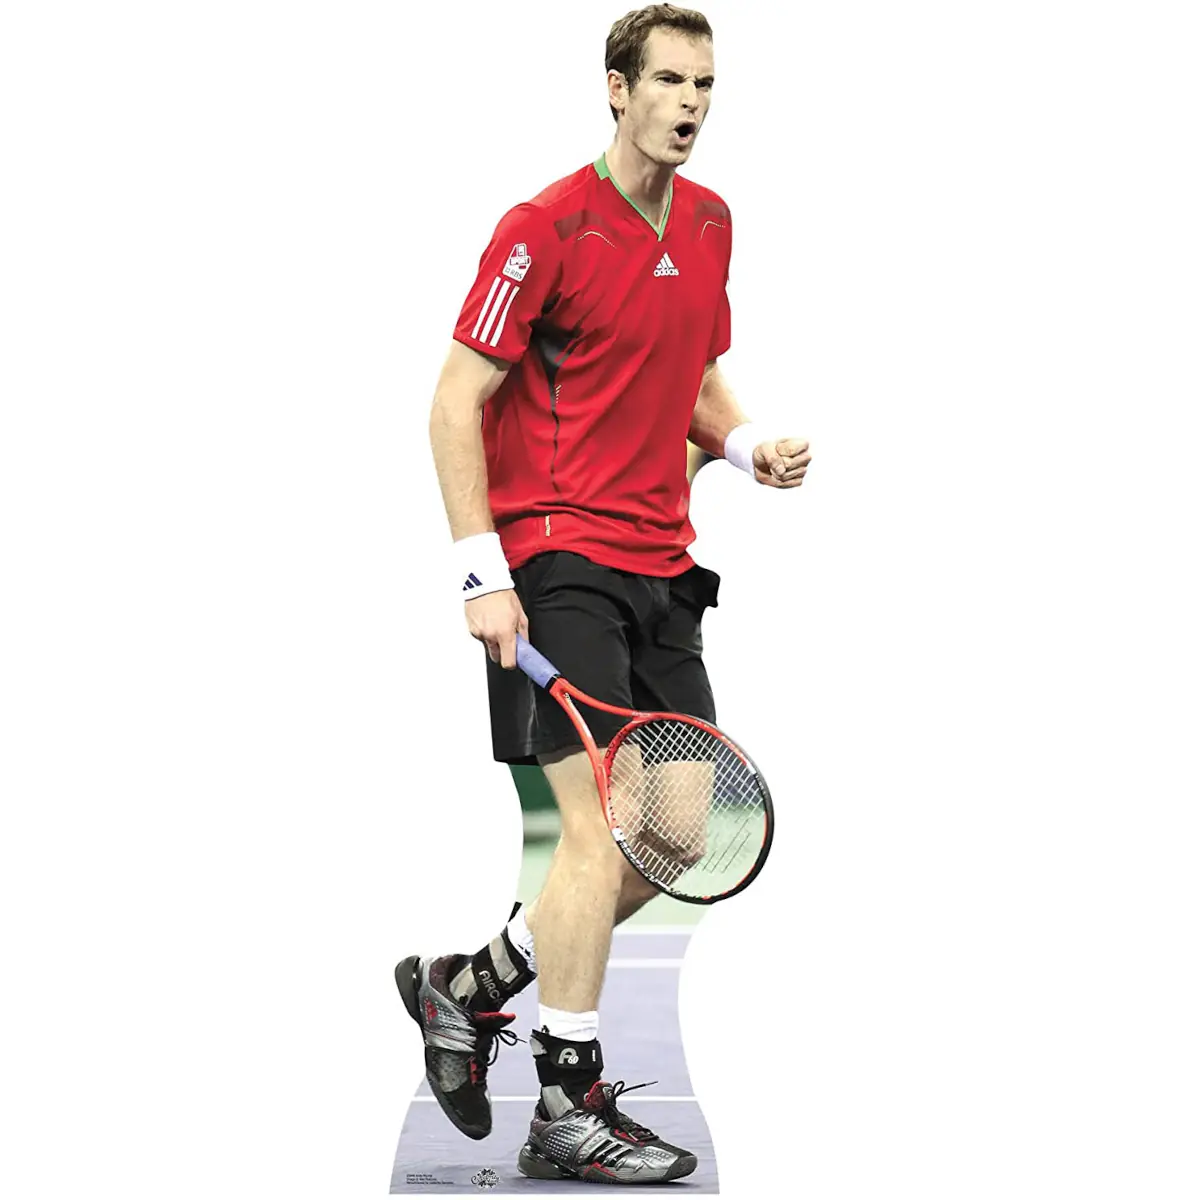 CS446 Sir Andy Murray On Court British Tennis Player Lifesize Cardboard Cutout Standee